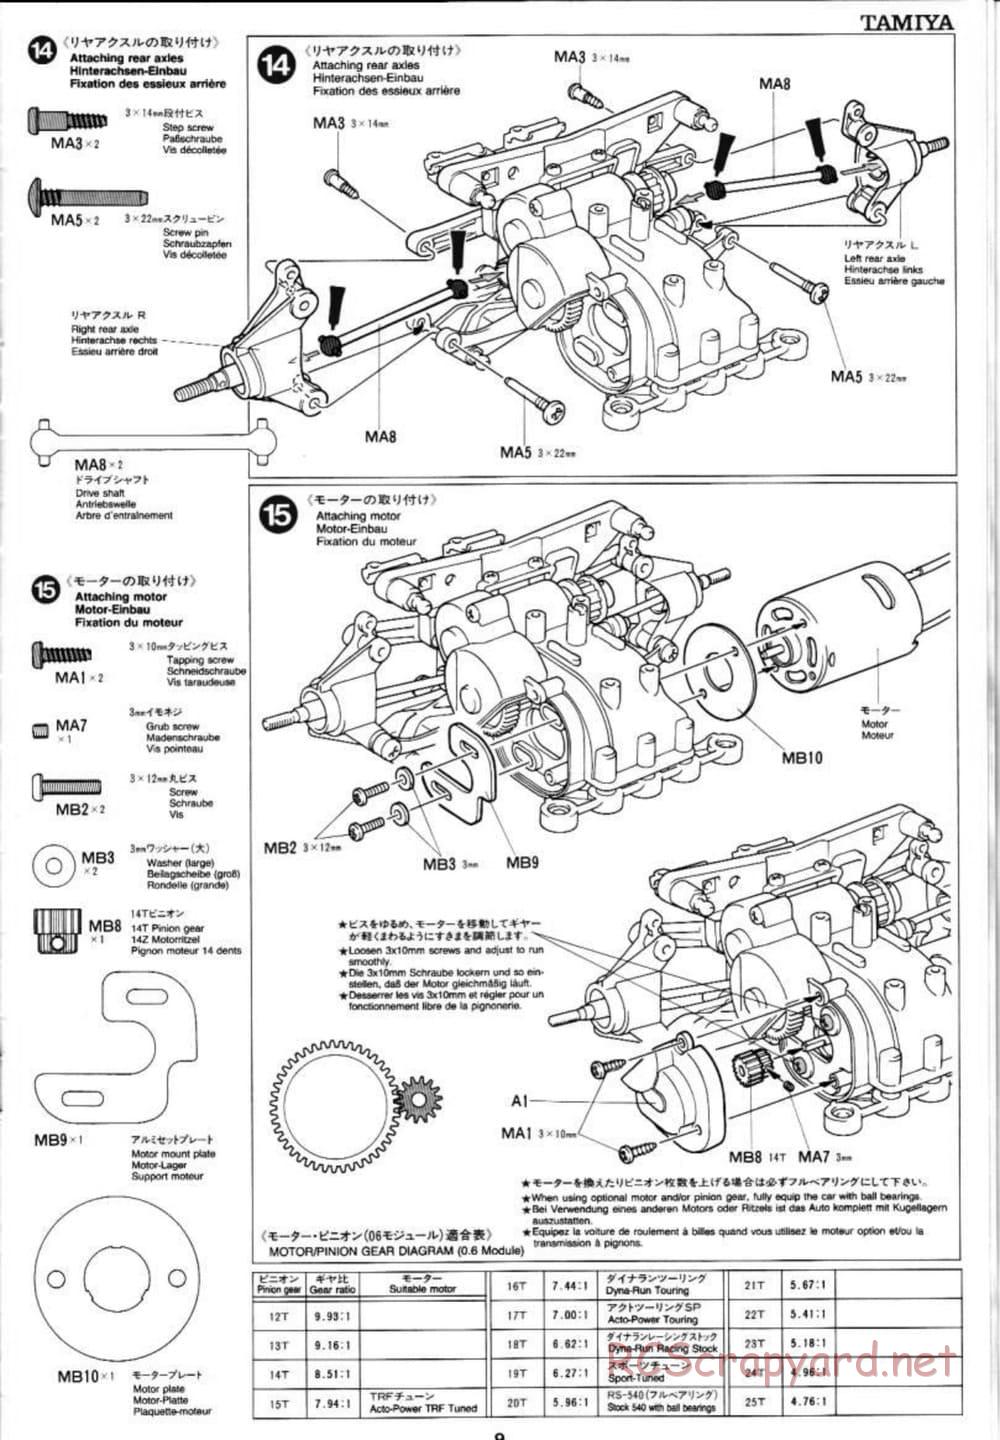 Tamiya - PIAA Porsche 911 - TA-03RS Chassis - Manual - Page 9